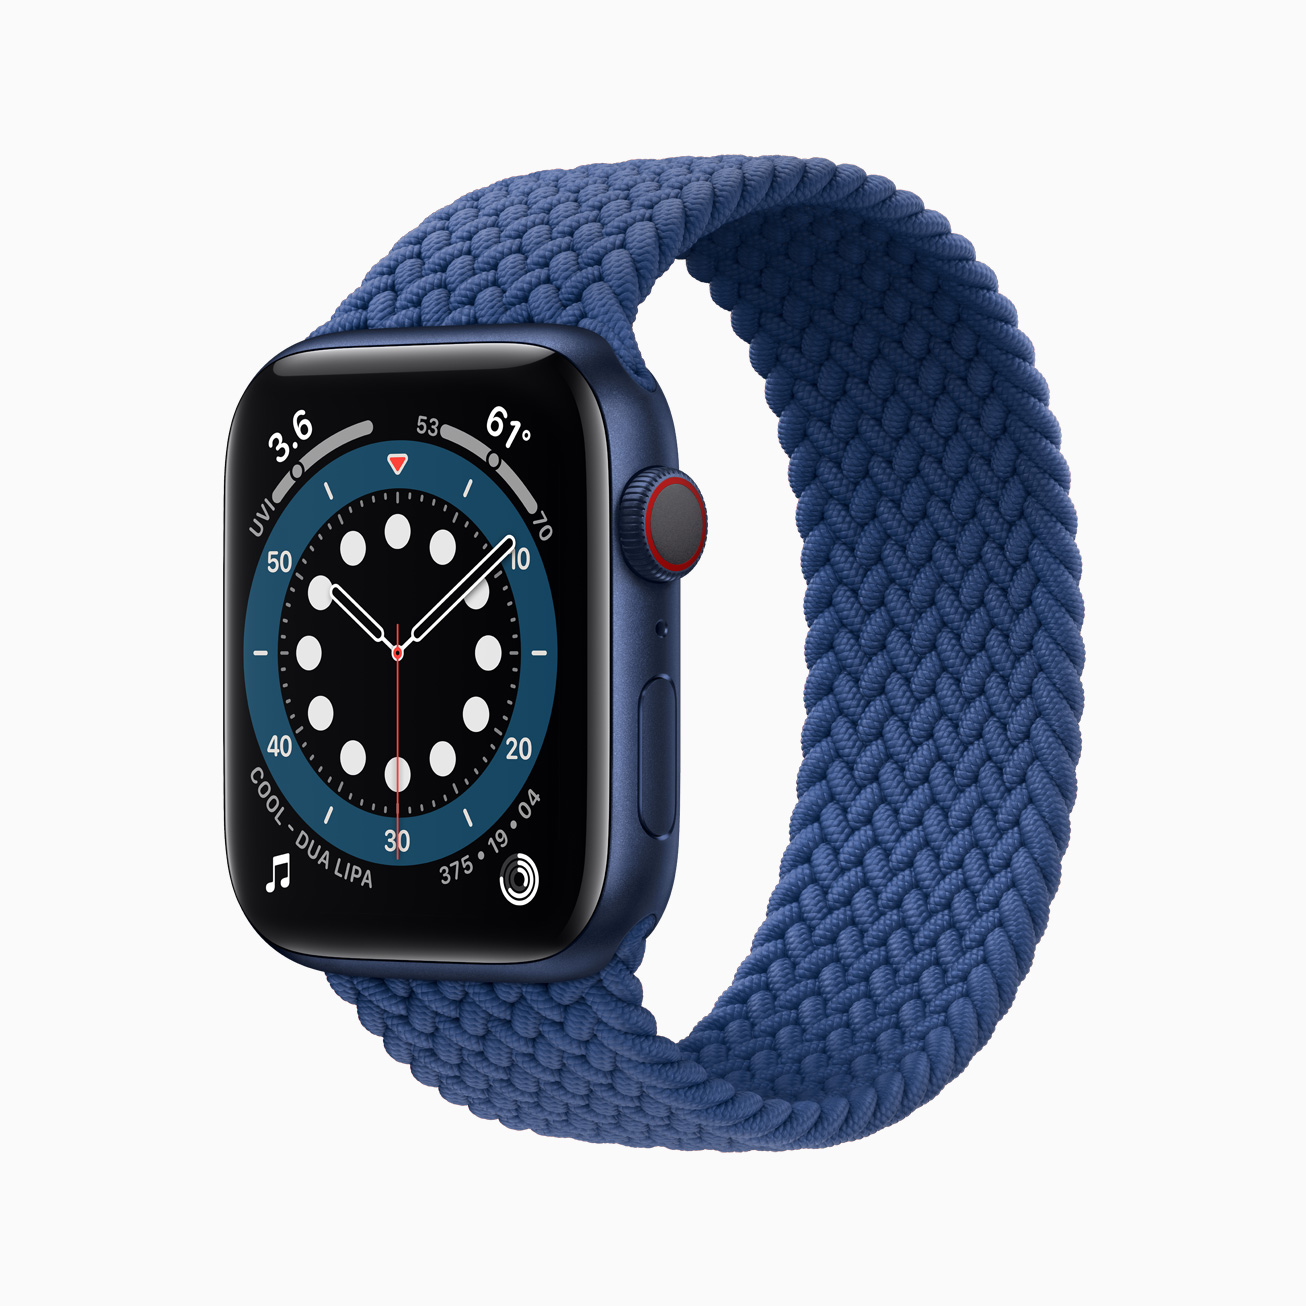 Apple watch series 6 aluminum blue case 09152020